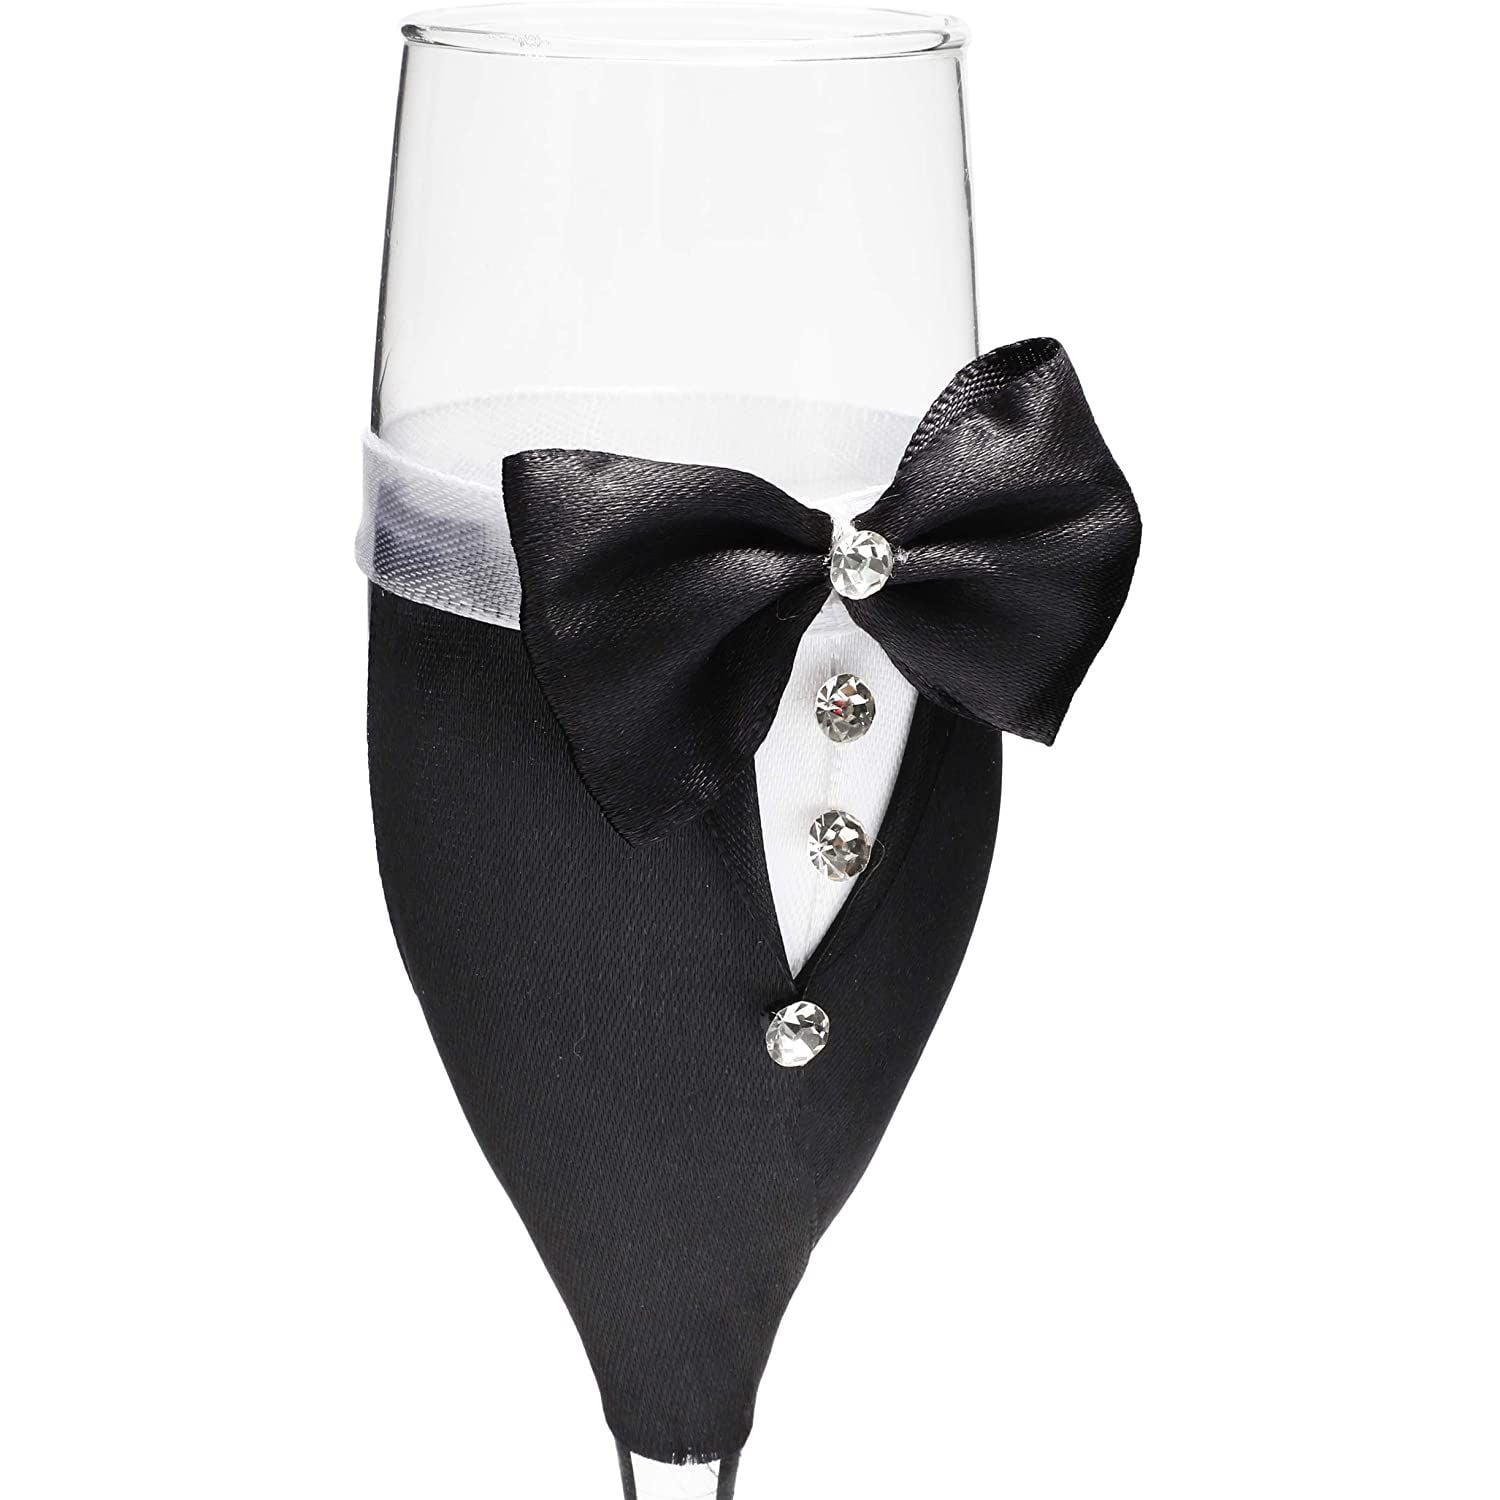 Champagne glass mr/&Mrs dress and tuxedo set.